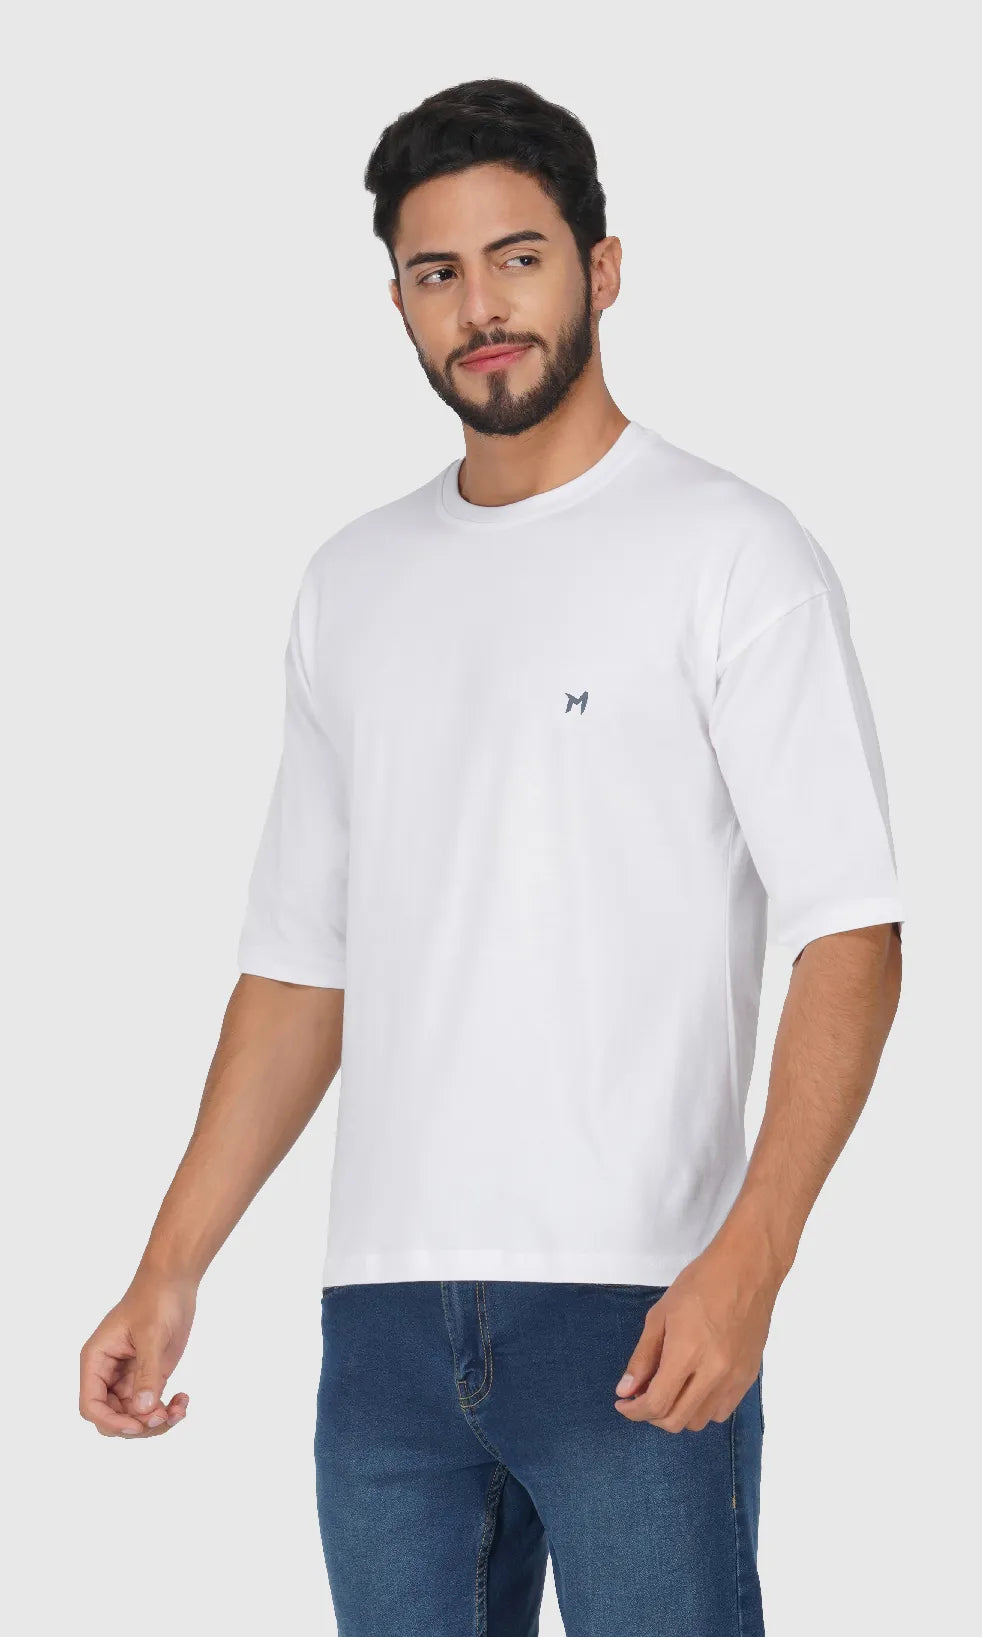 Mebadass Cotton Men's OverSized/Baggy Dropshoulder T-shirts - White